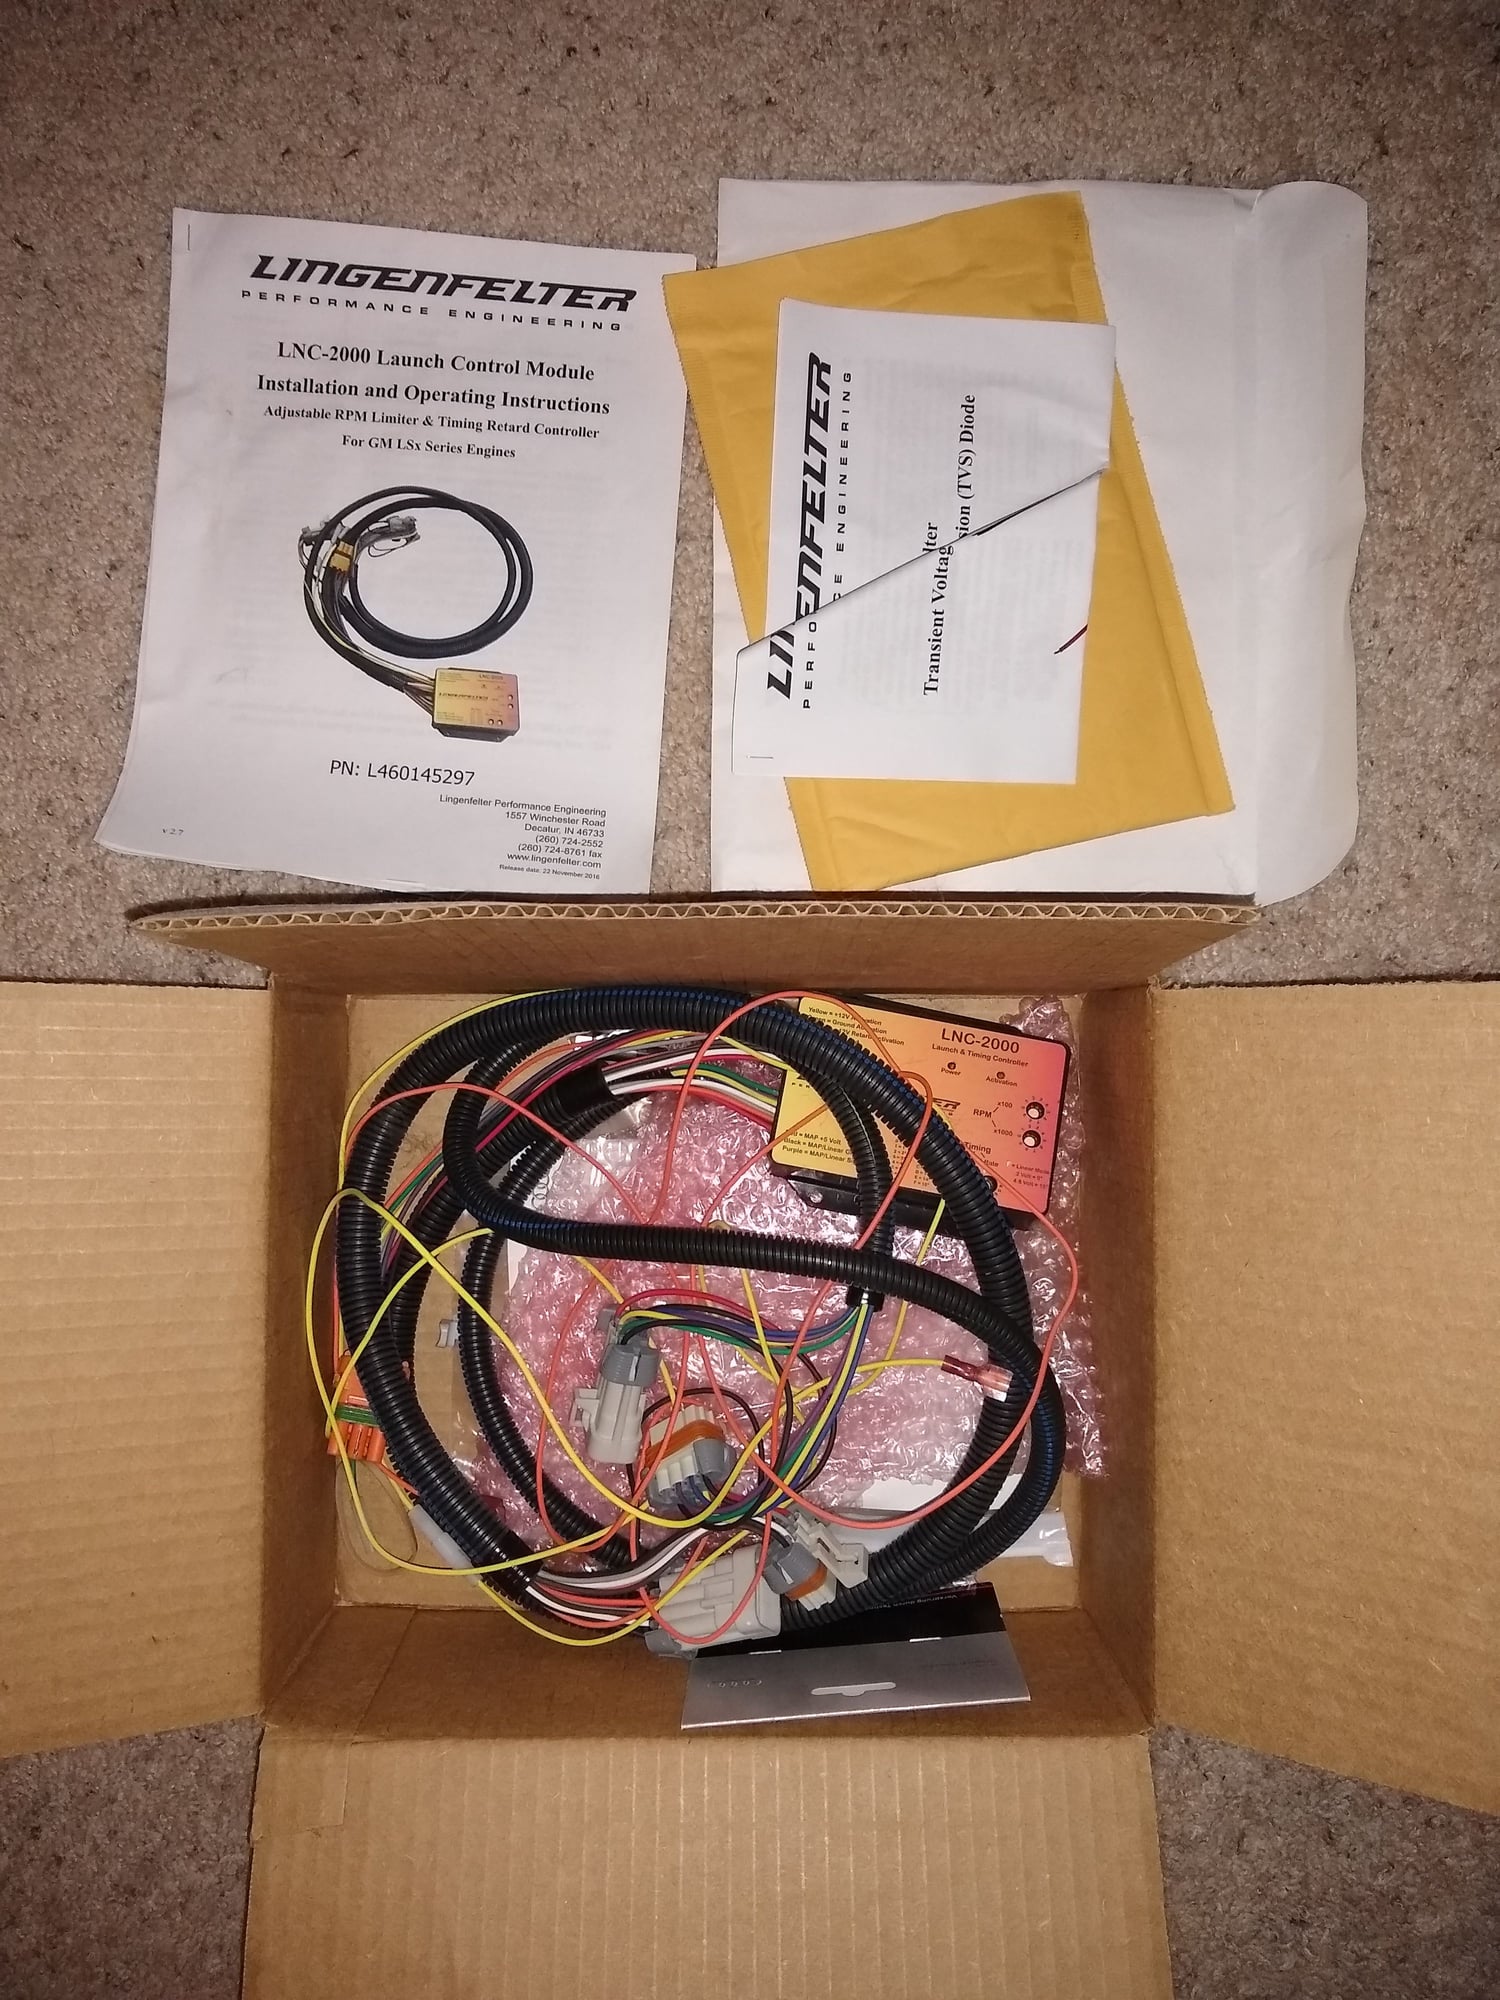  - Lingenfelter LNC-2000 2-step. NEW - open box - Loveland, CO 80537, United States